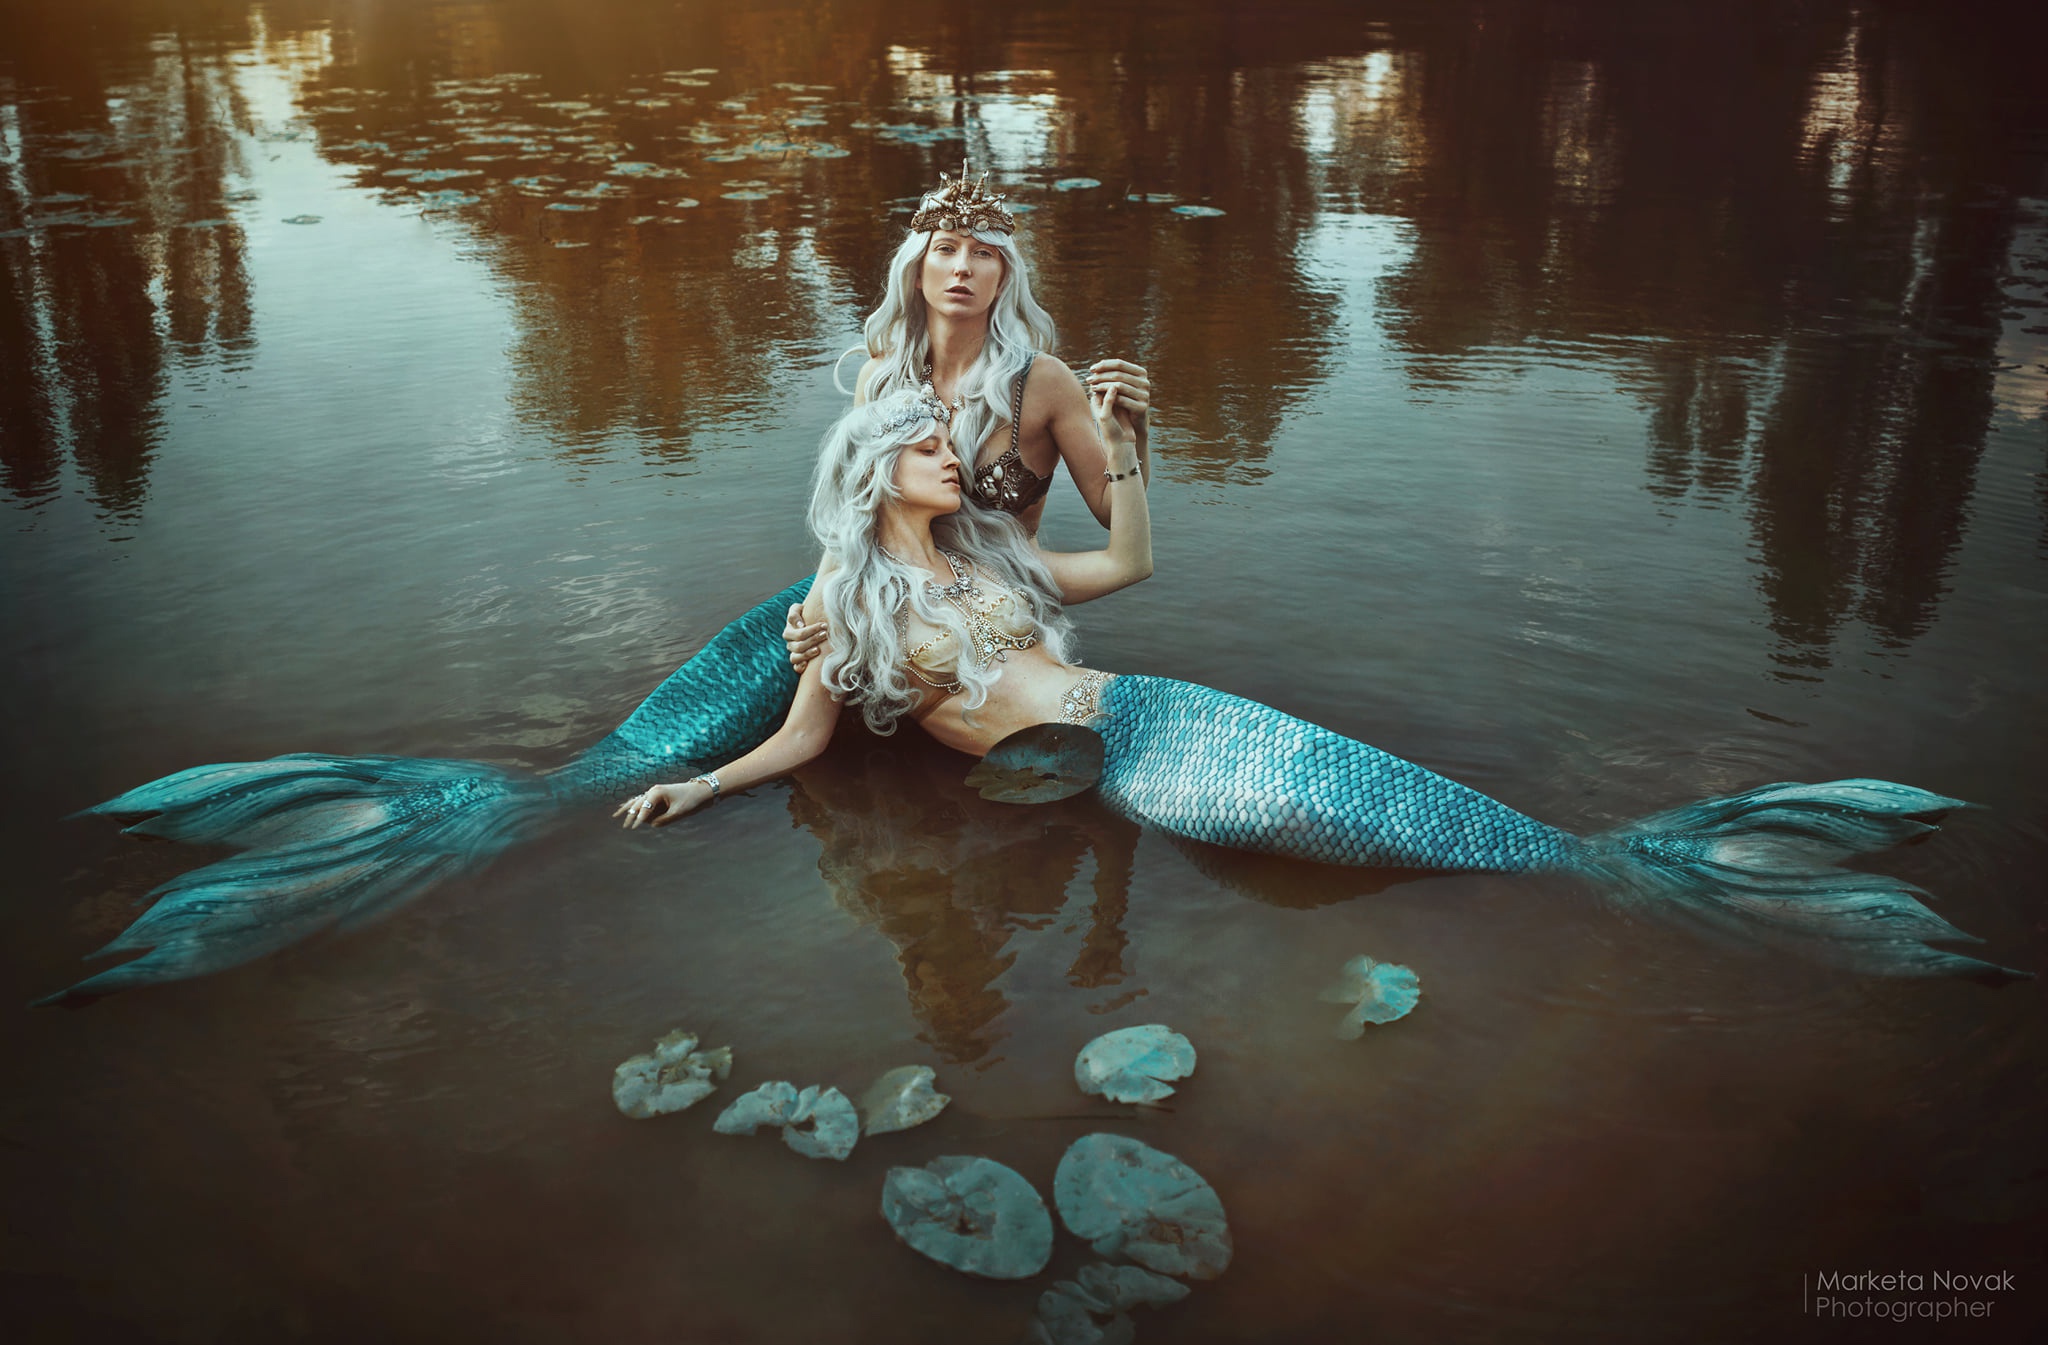 People 2048x1345 Marketa Novak women model two women mermaids fantasy girl in water outdoors long hair crown holding hands gray hair sensual gaze women outdoors